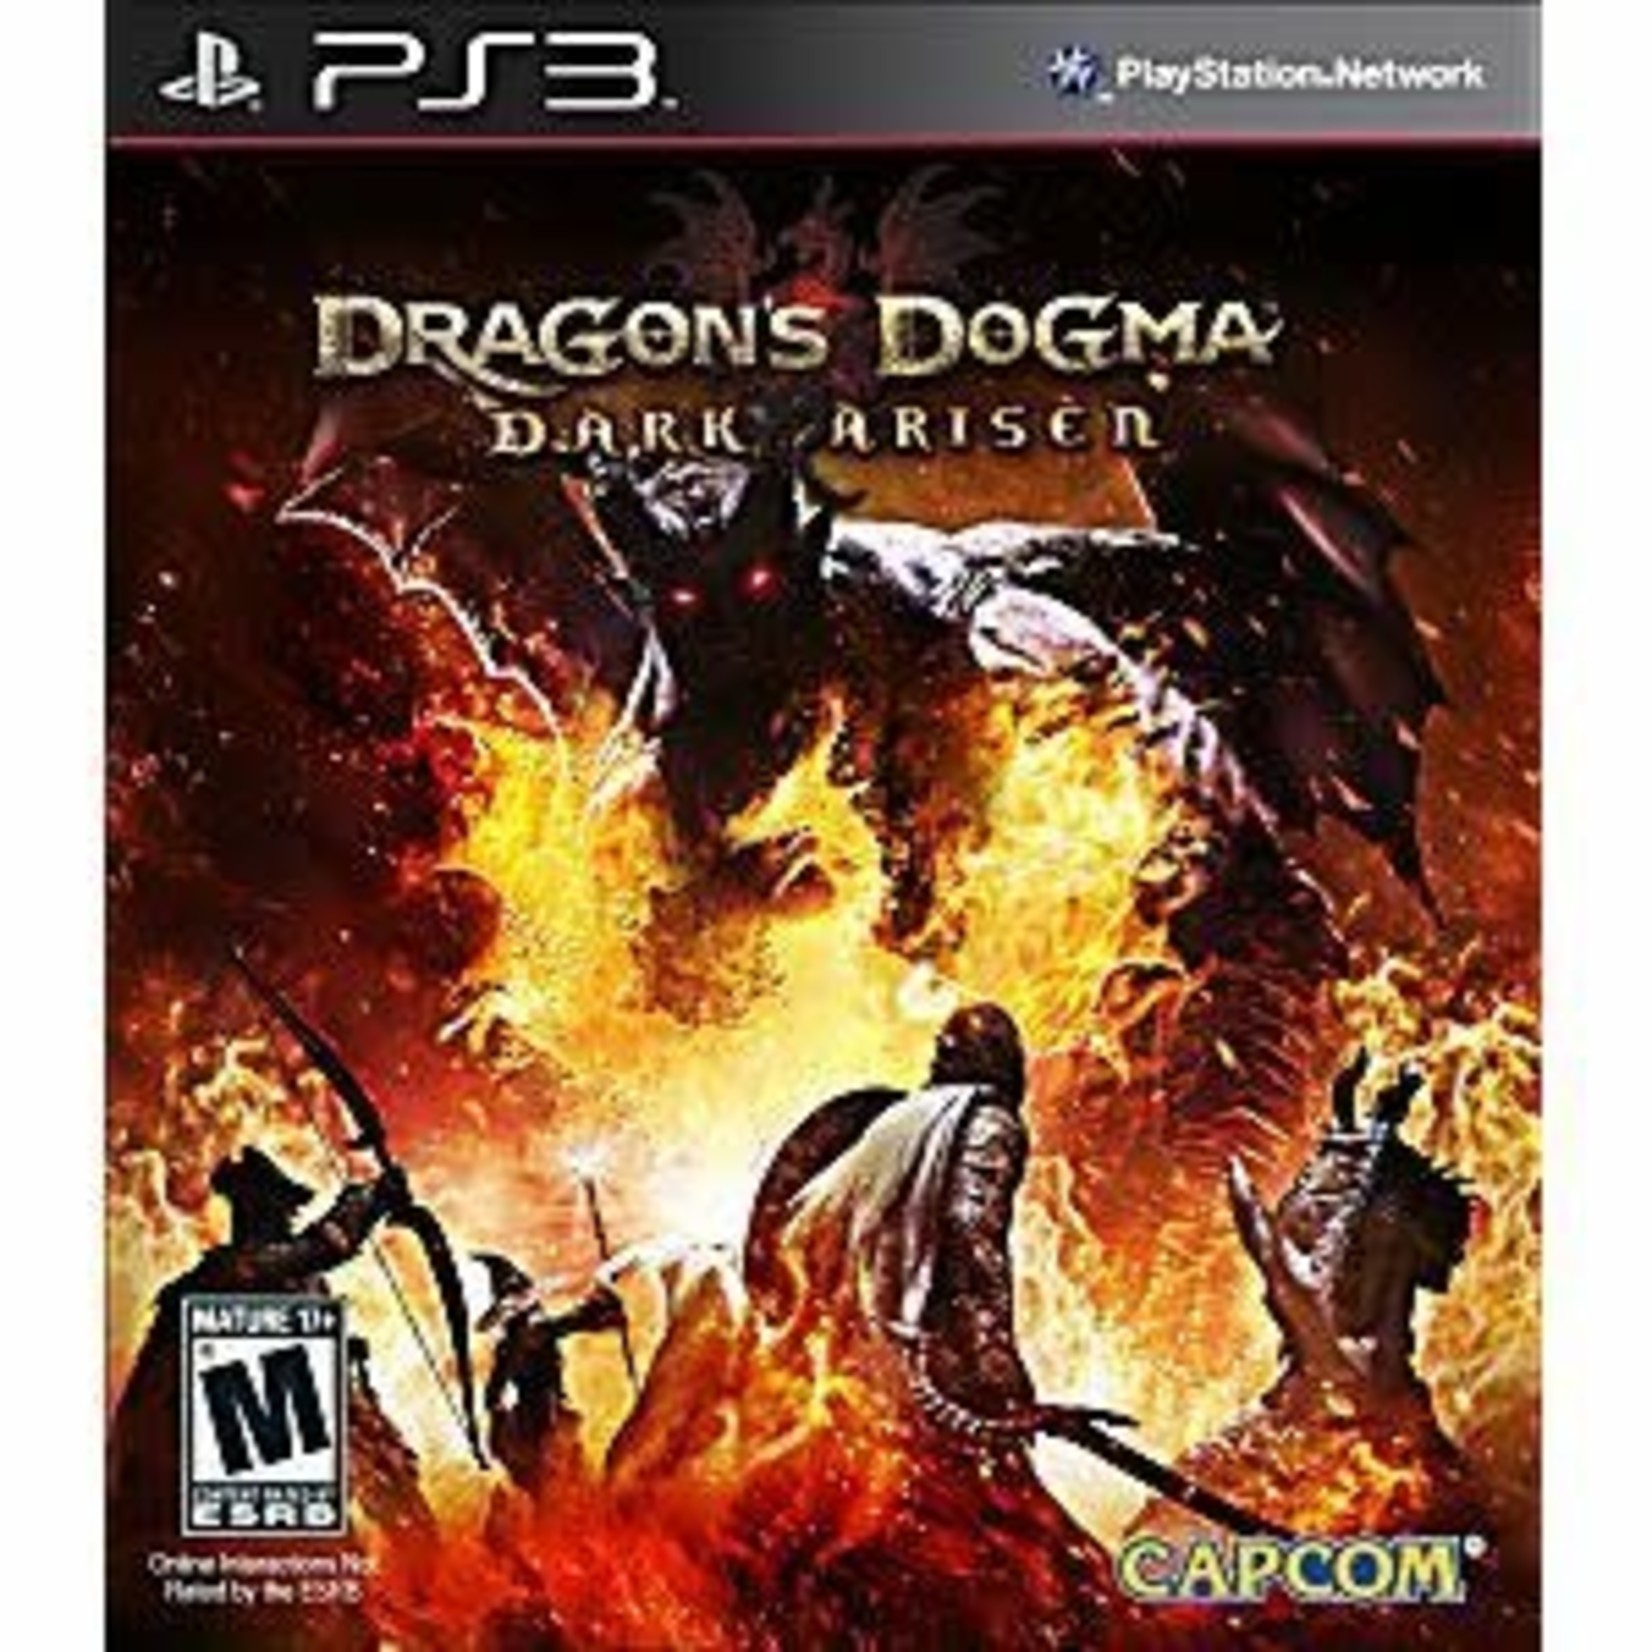 PS3-Dragon's Dogma: Dark Arisen